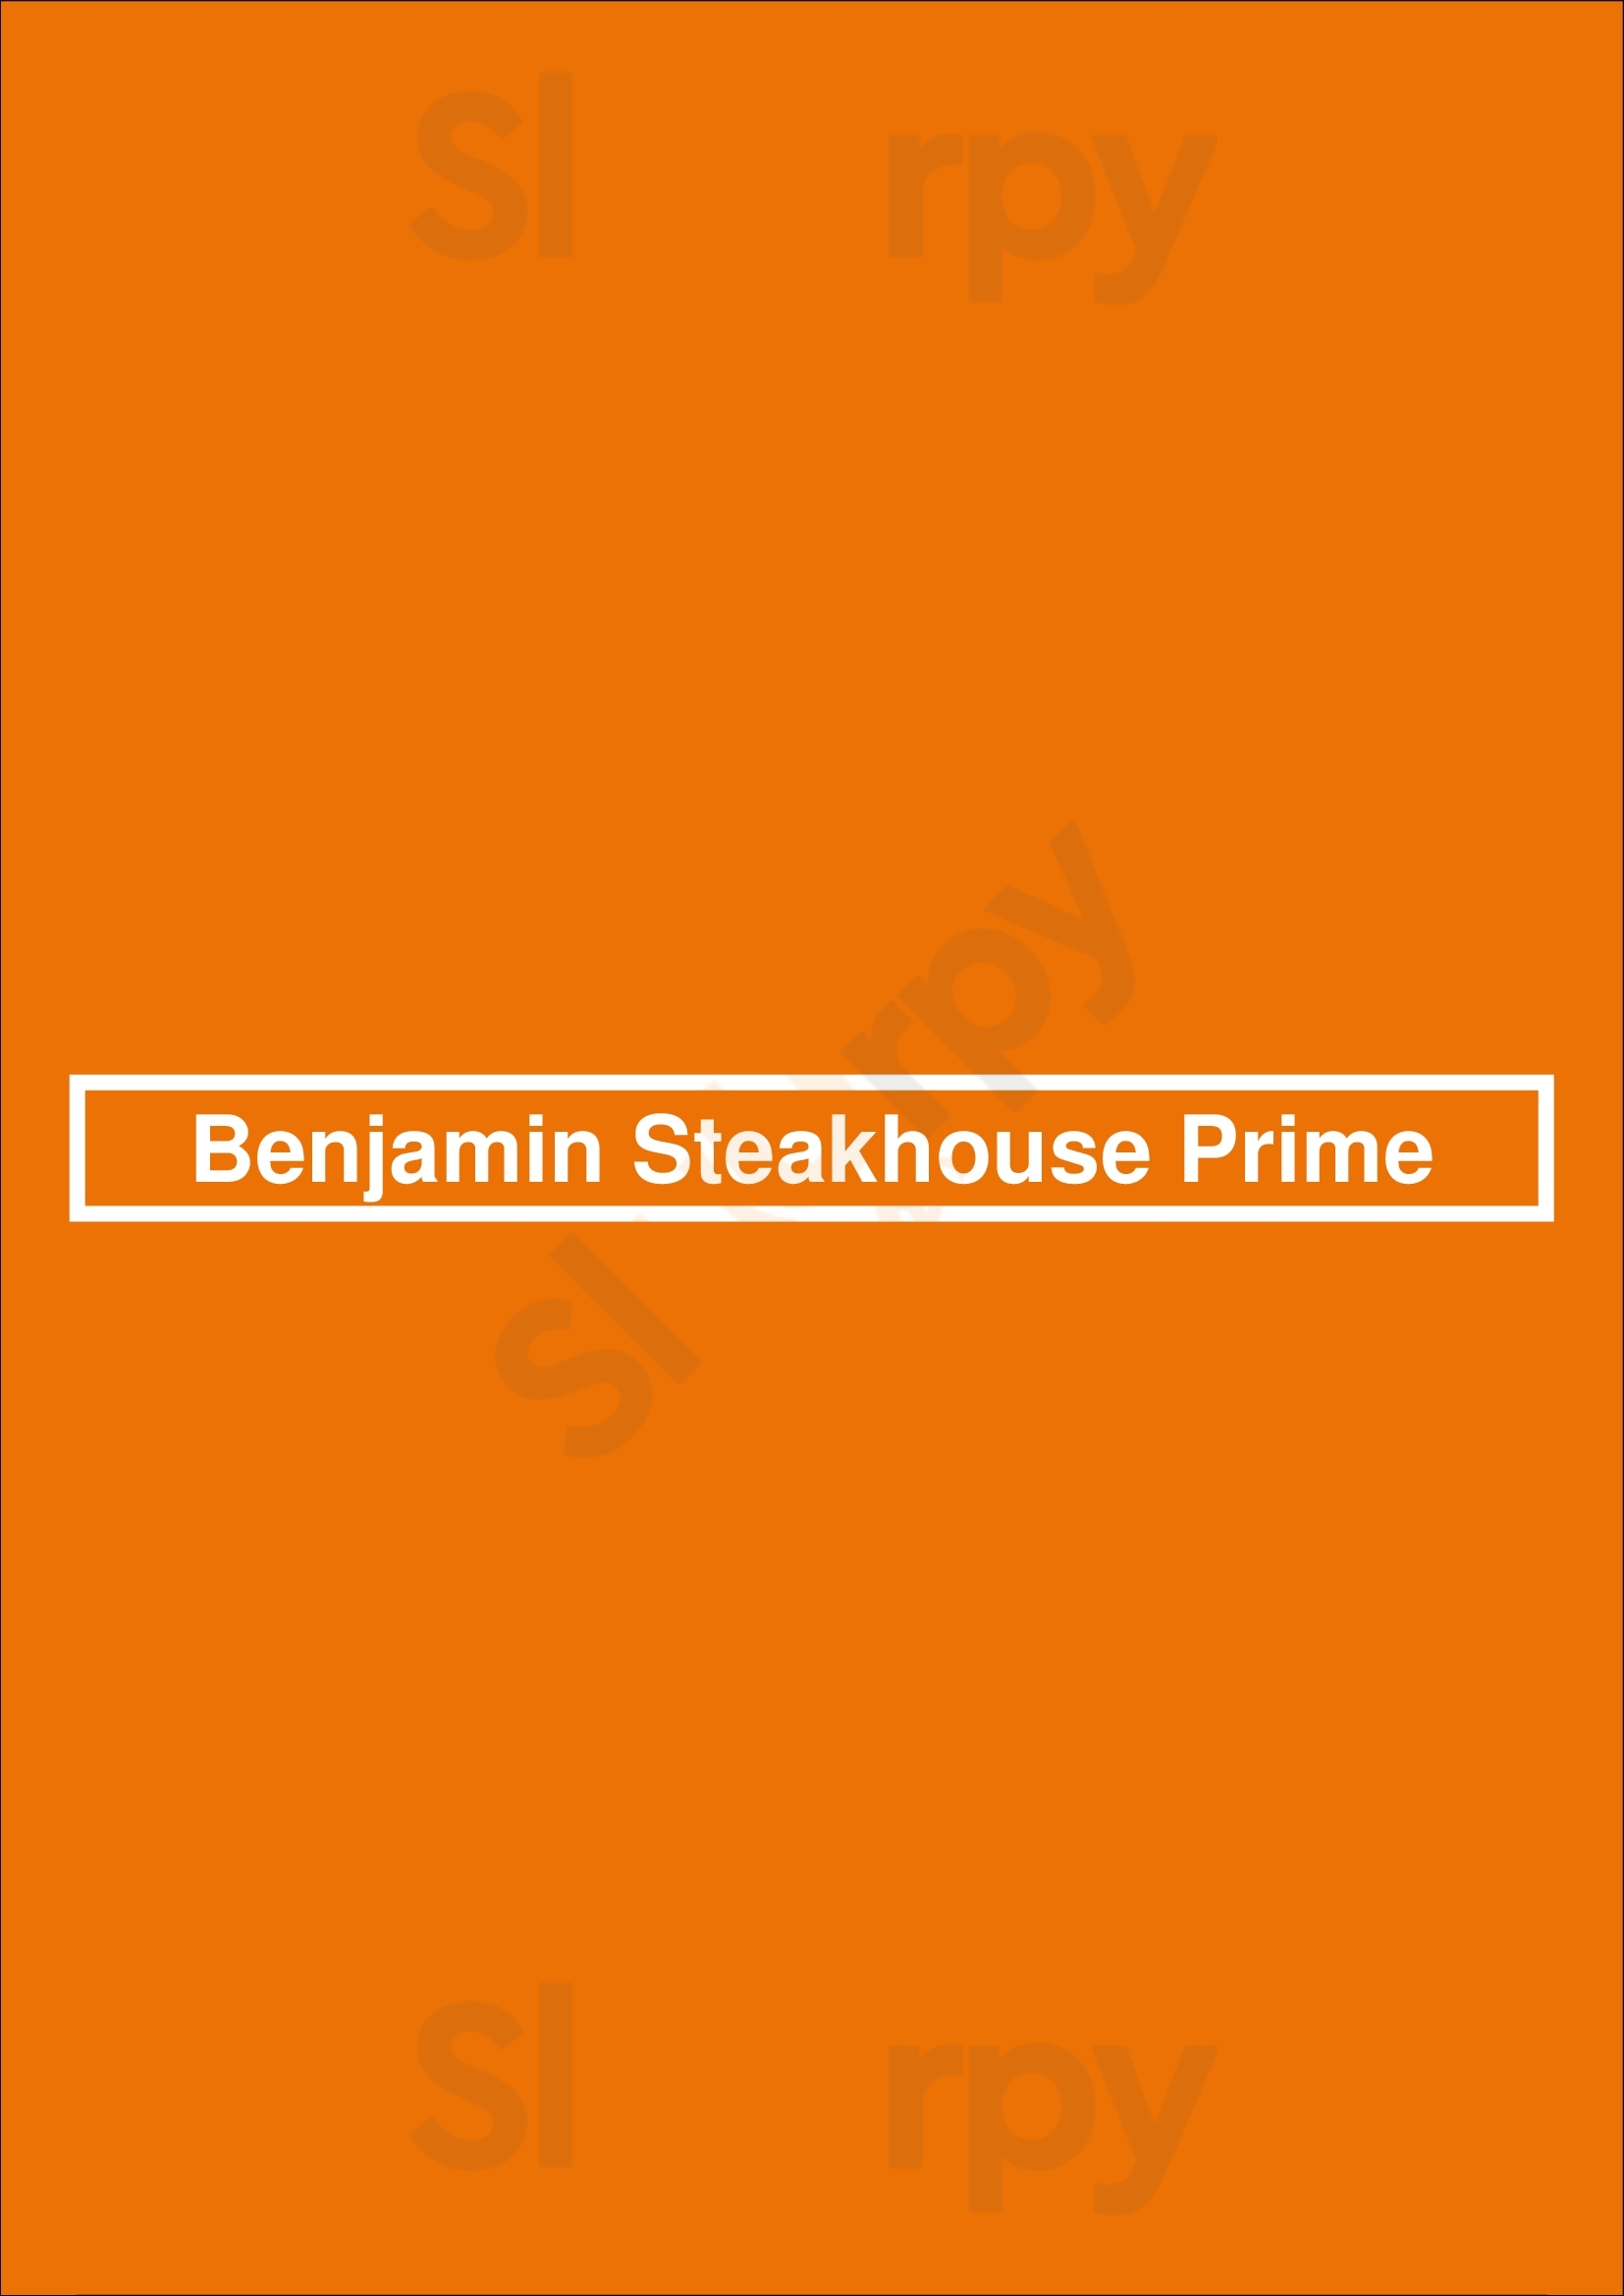 Benjamin Steakhouse Prime New York City Menu - 1